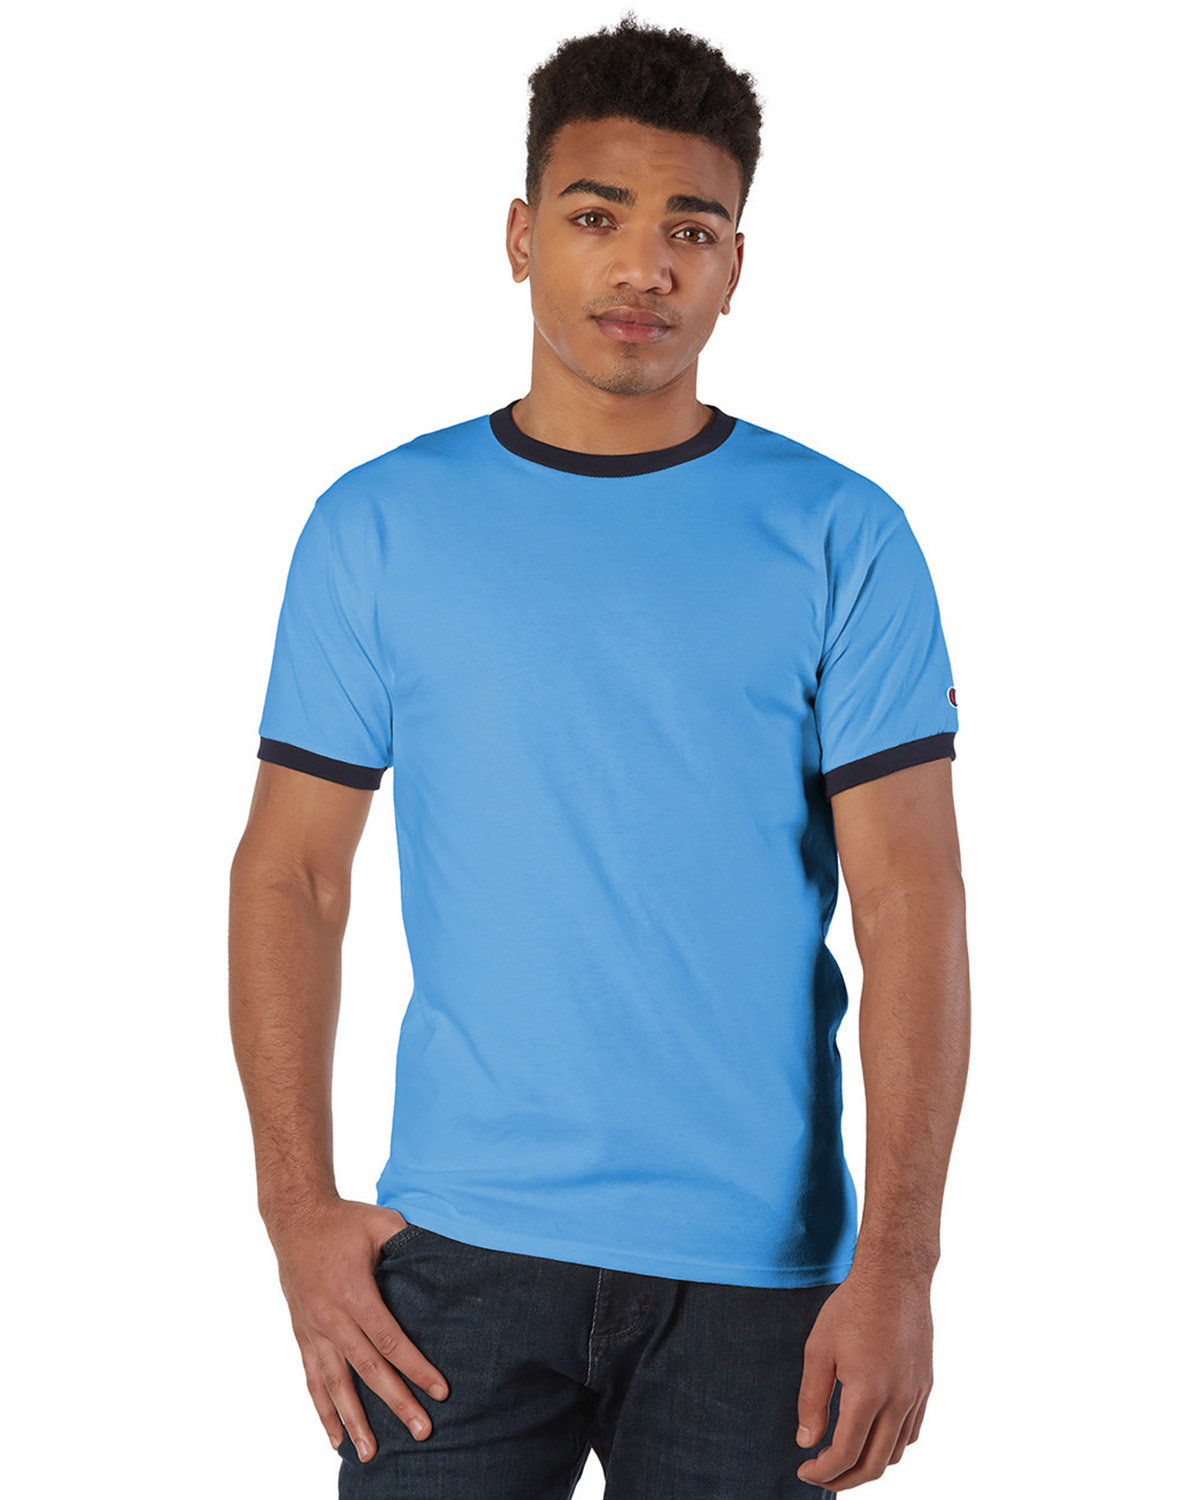 A4 T-Shirts in Online Buy/Shop Bordova NJ – – Uniforms